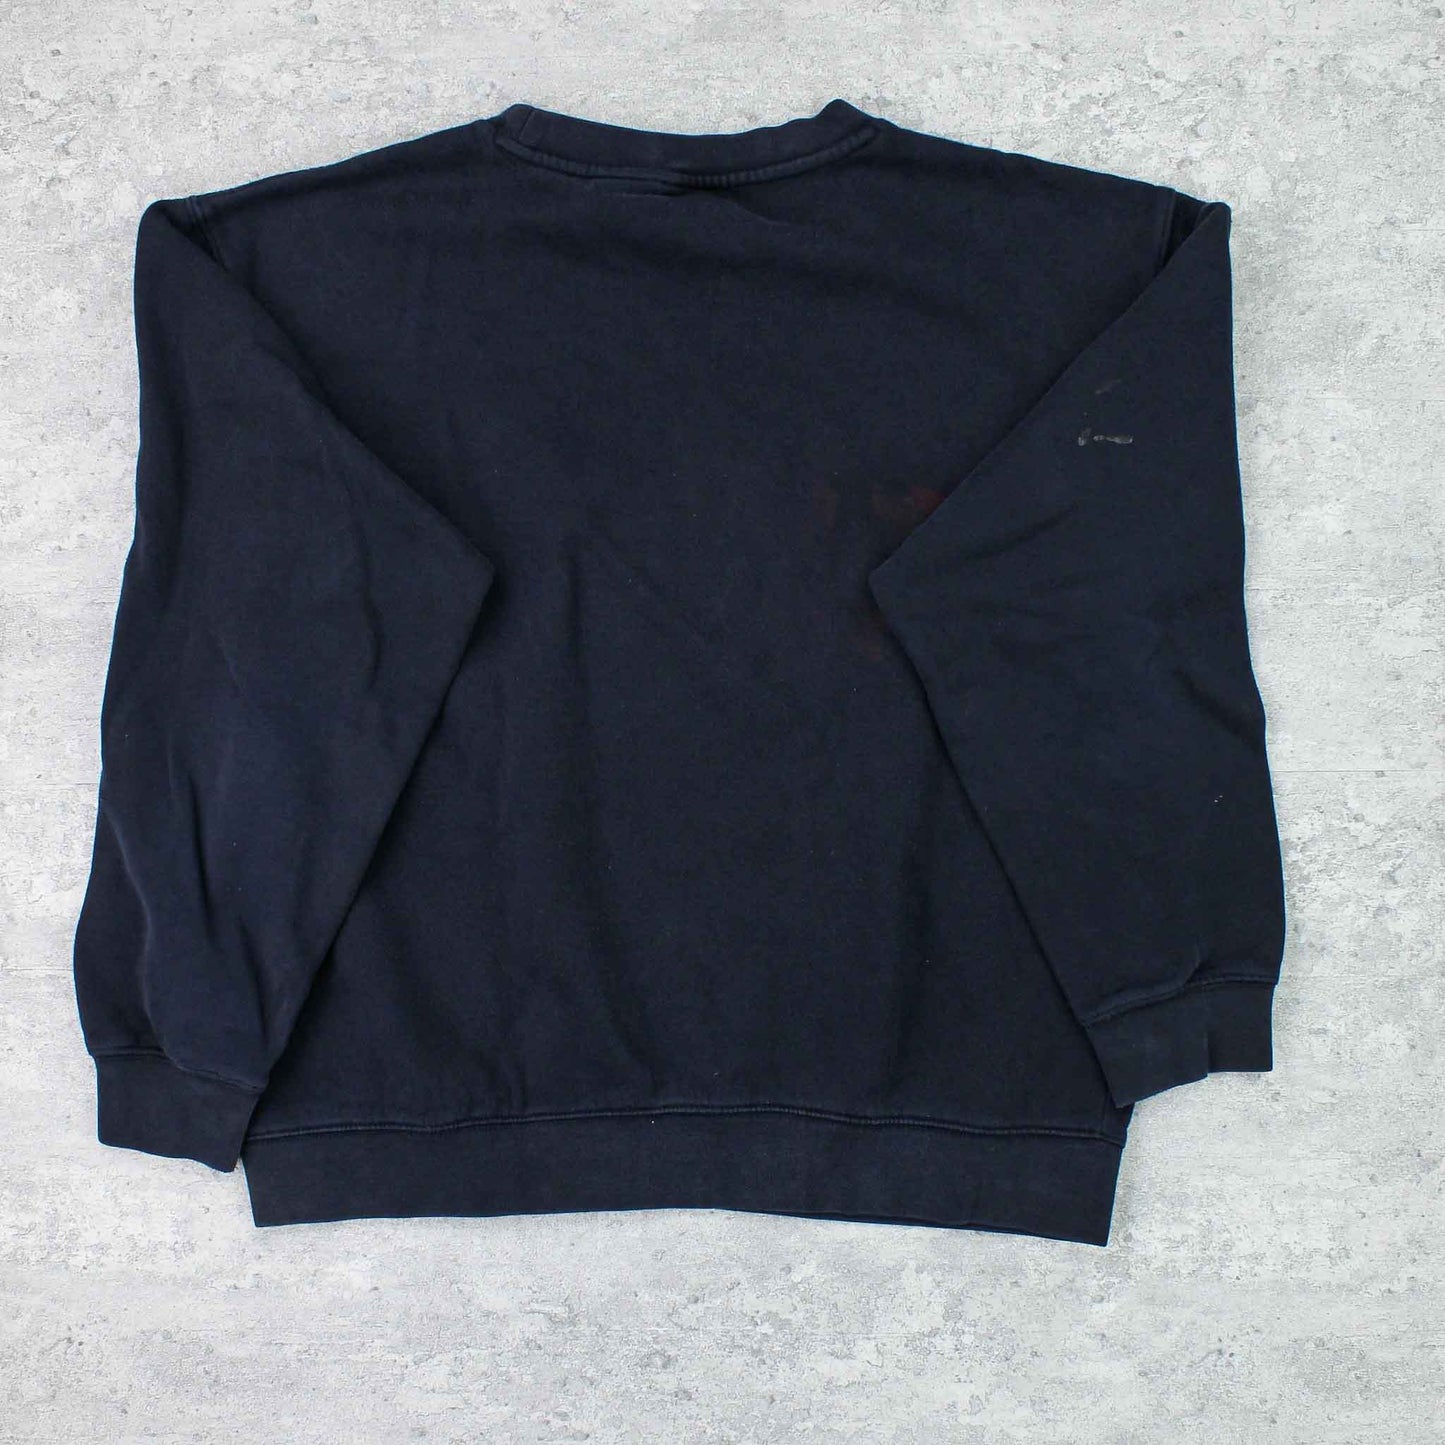 Vintage Fila Spellout Sweater Blau - S